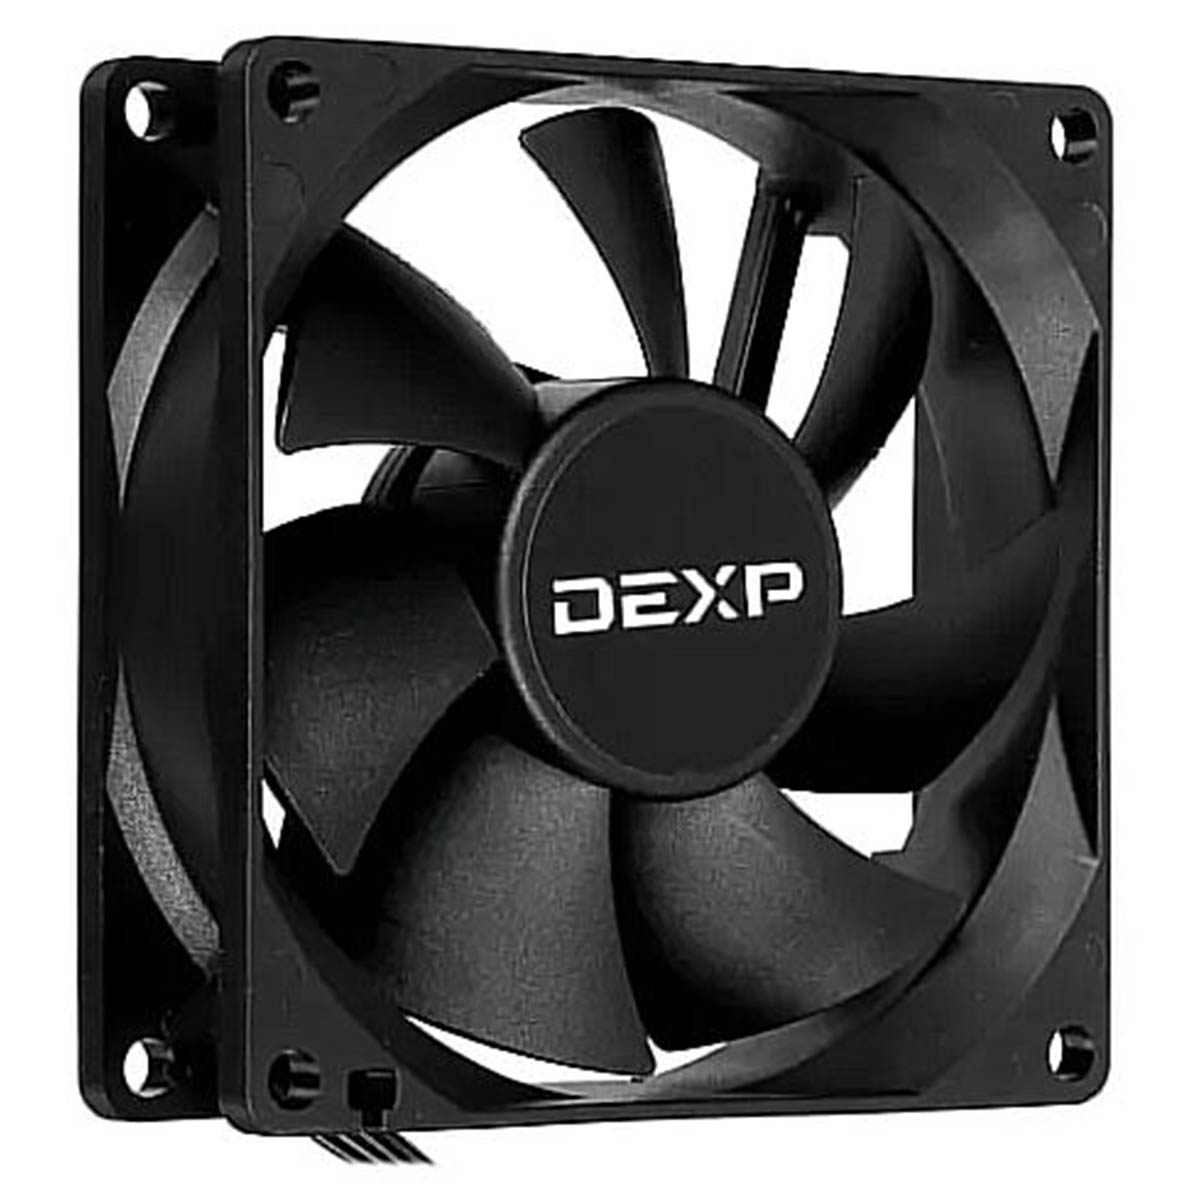 Вентилятор DEXP DX80FDBPWM, цвет черный